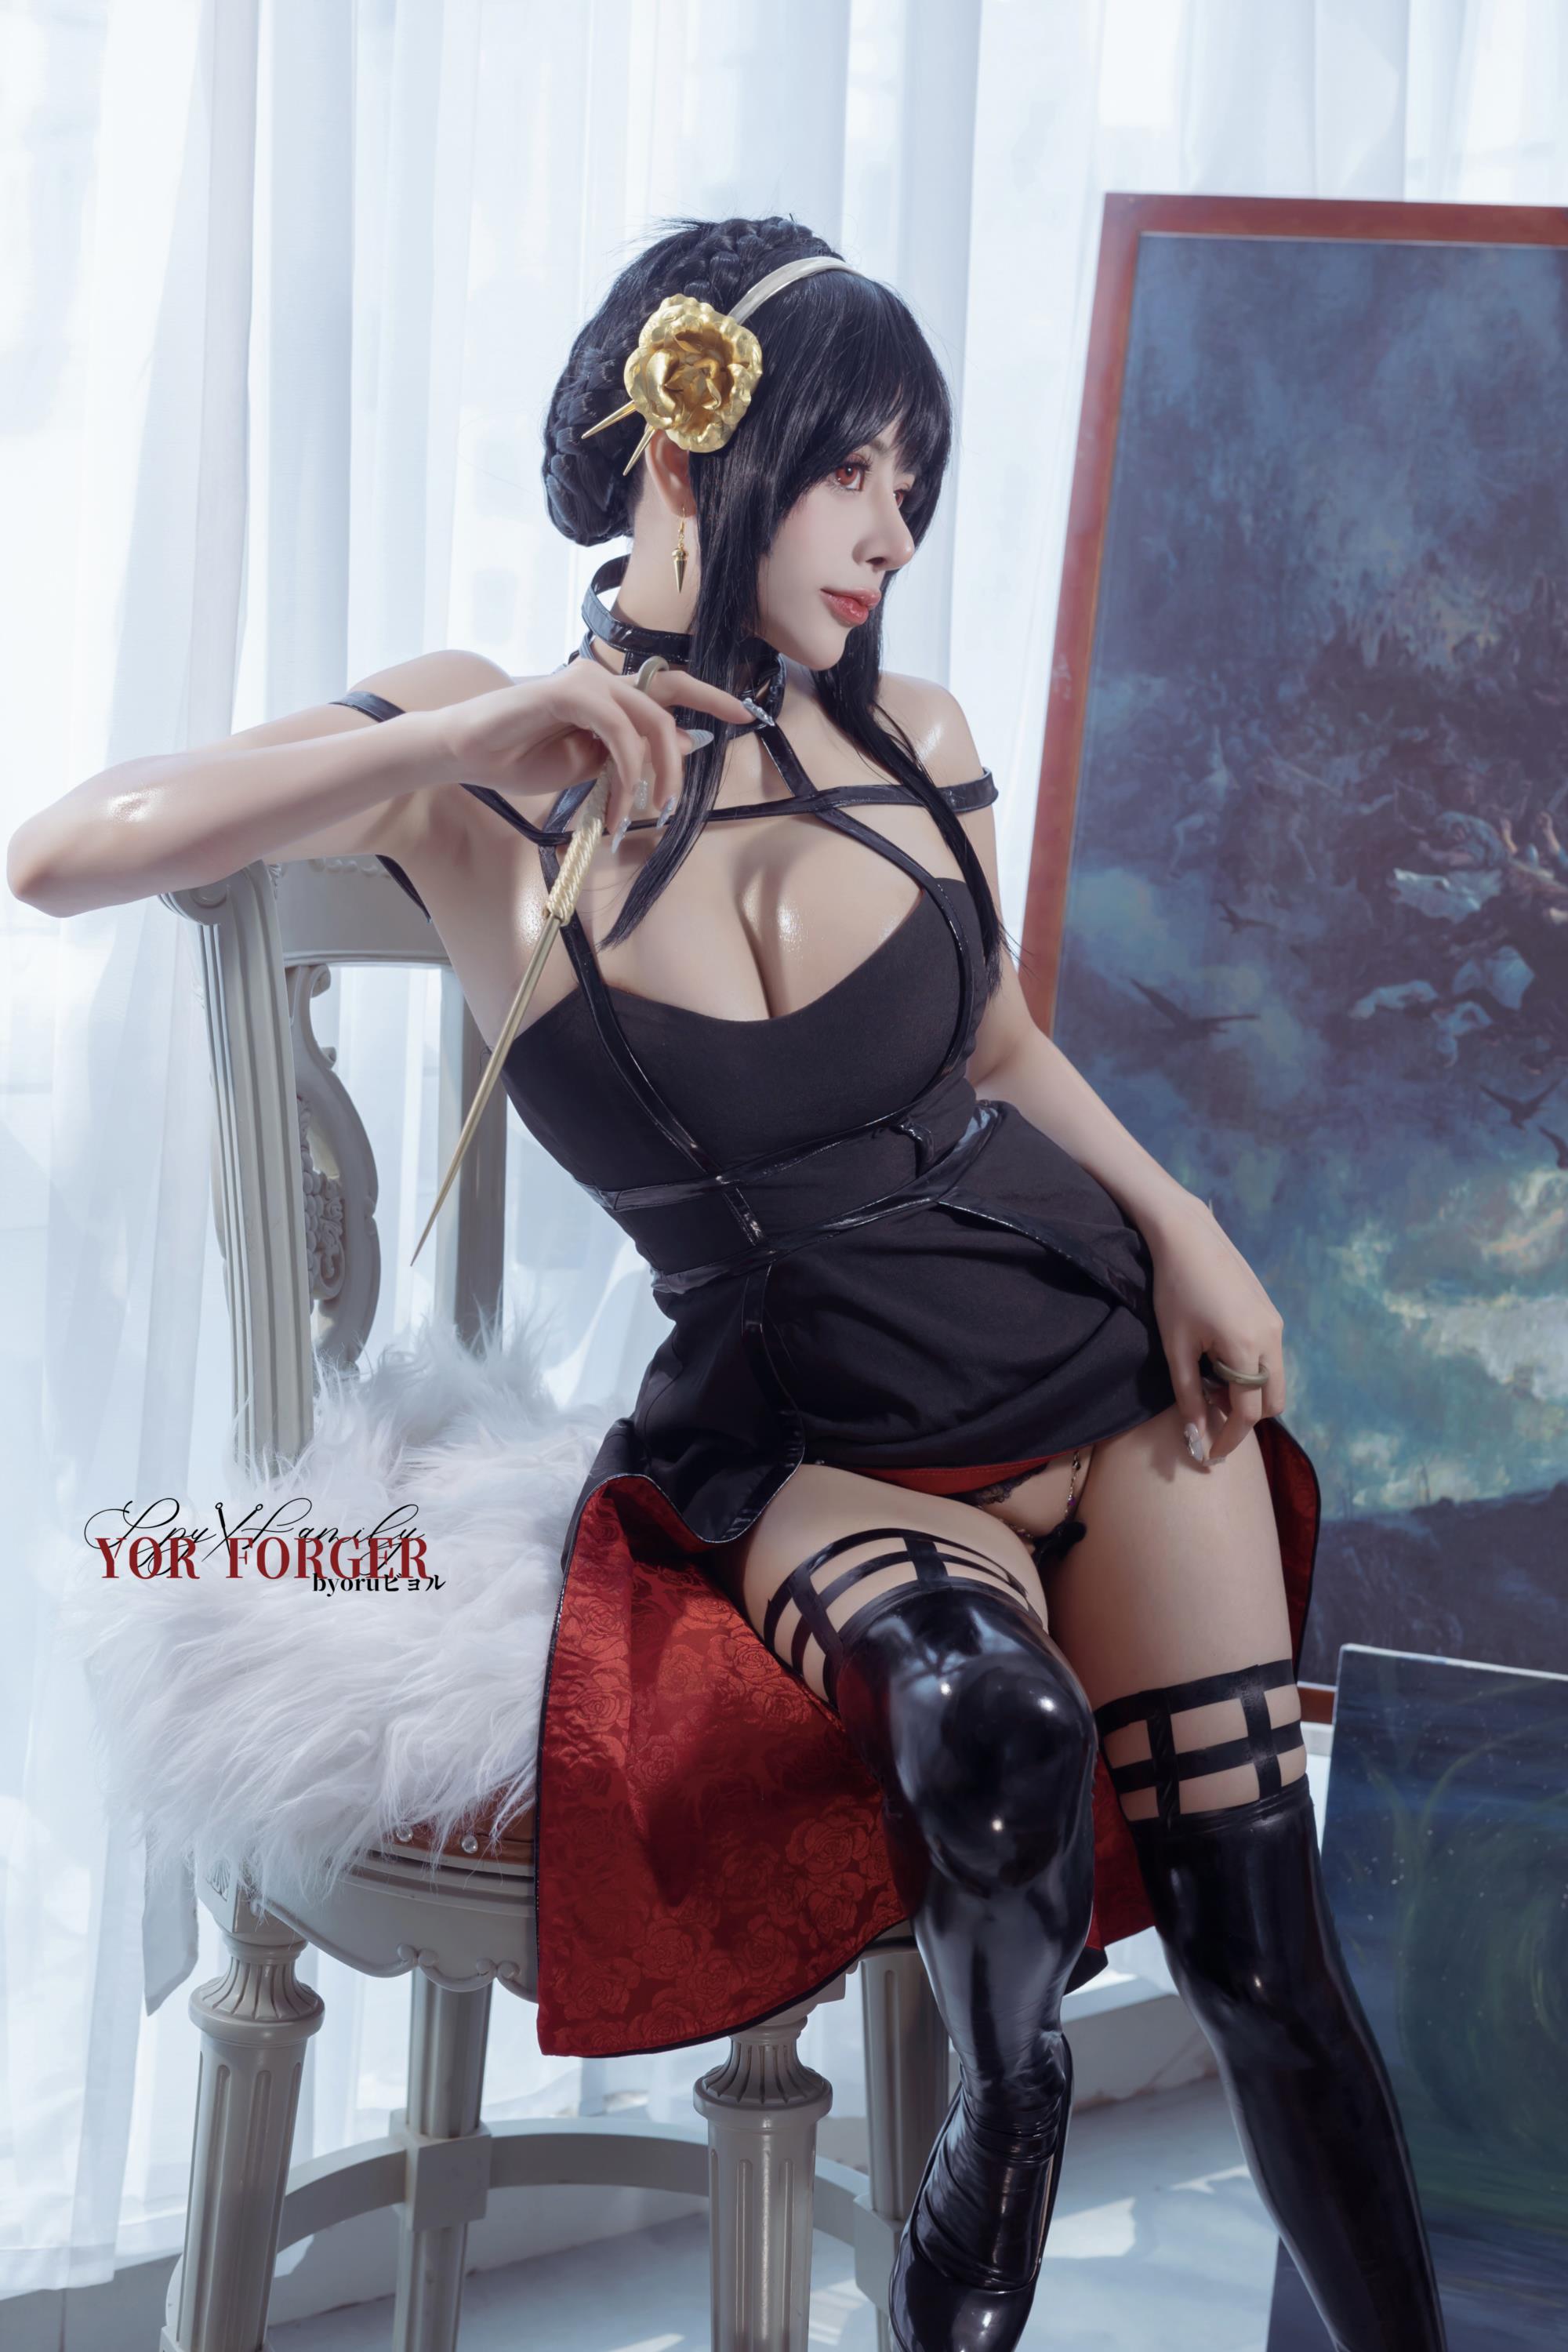 Cosplay Byoru Yor thorn princess - 2.jpg